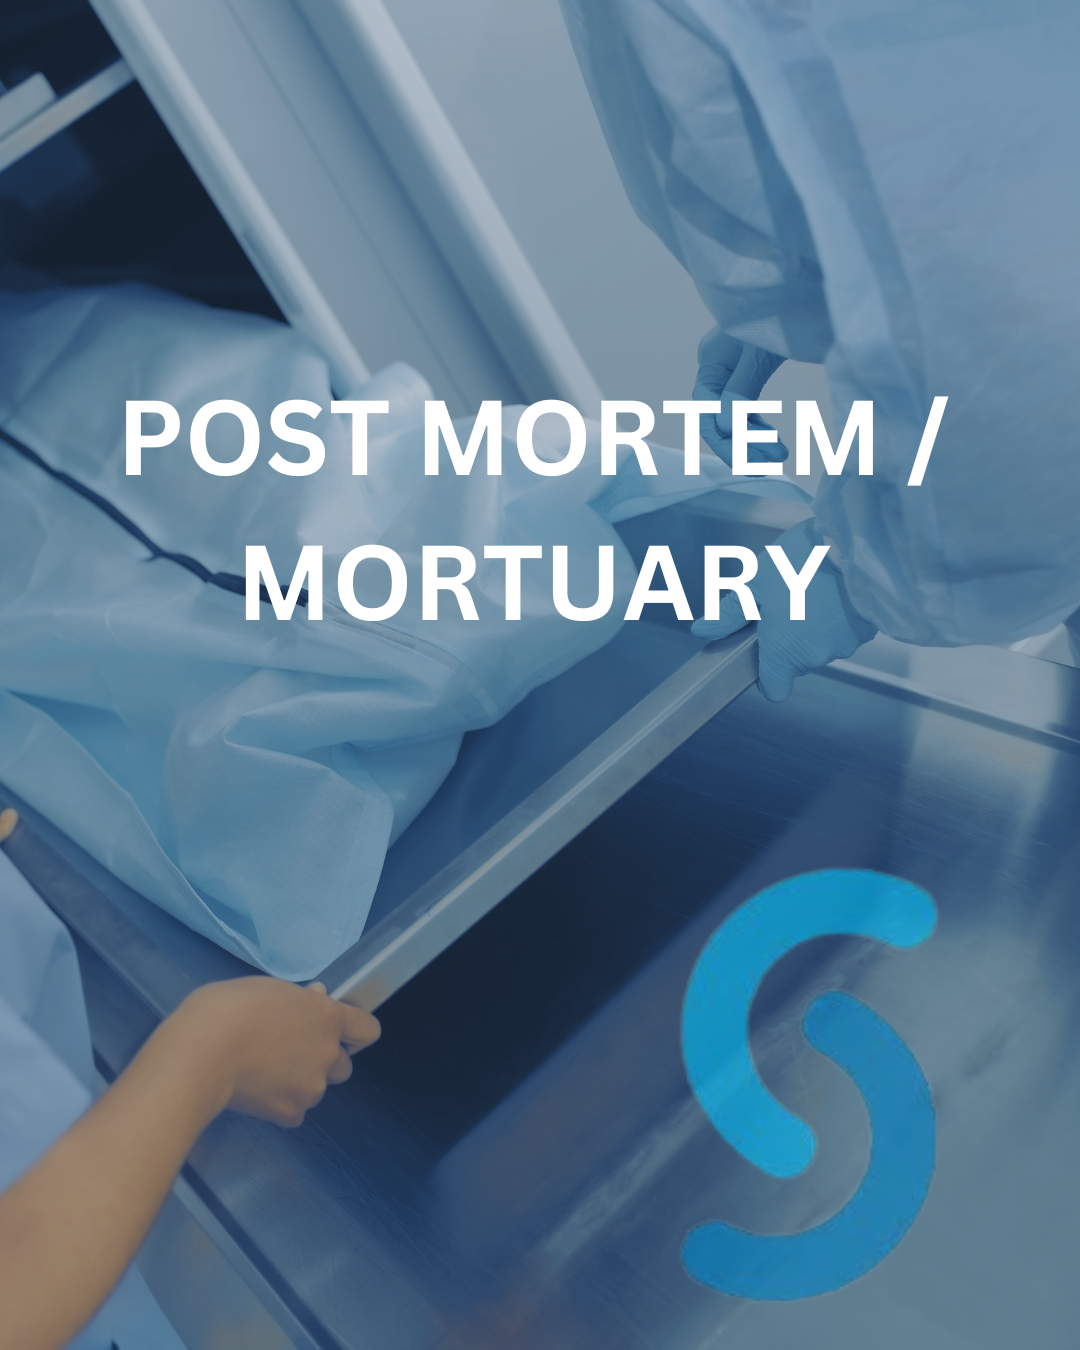 Post mortem / Mortuary